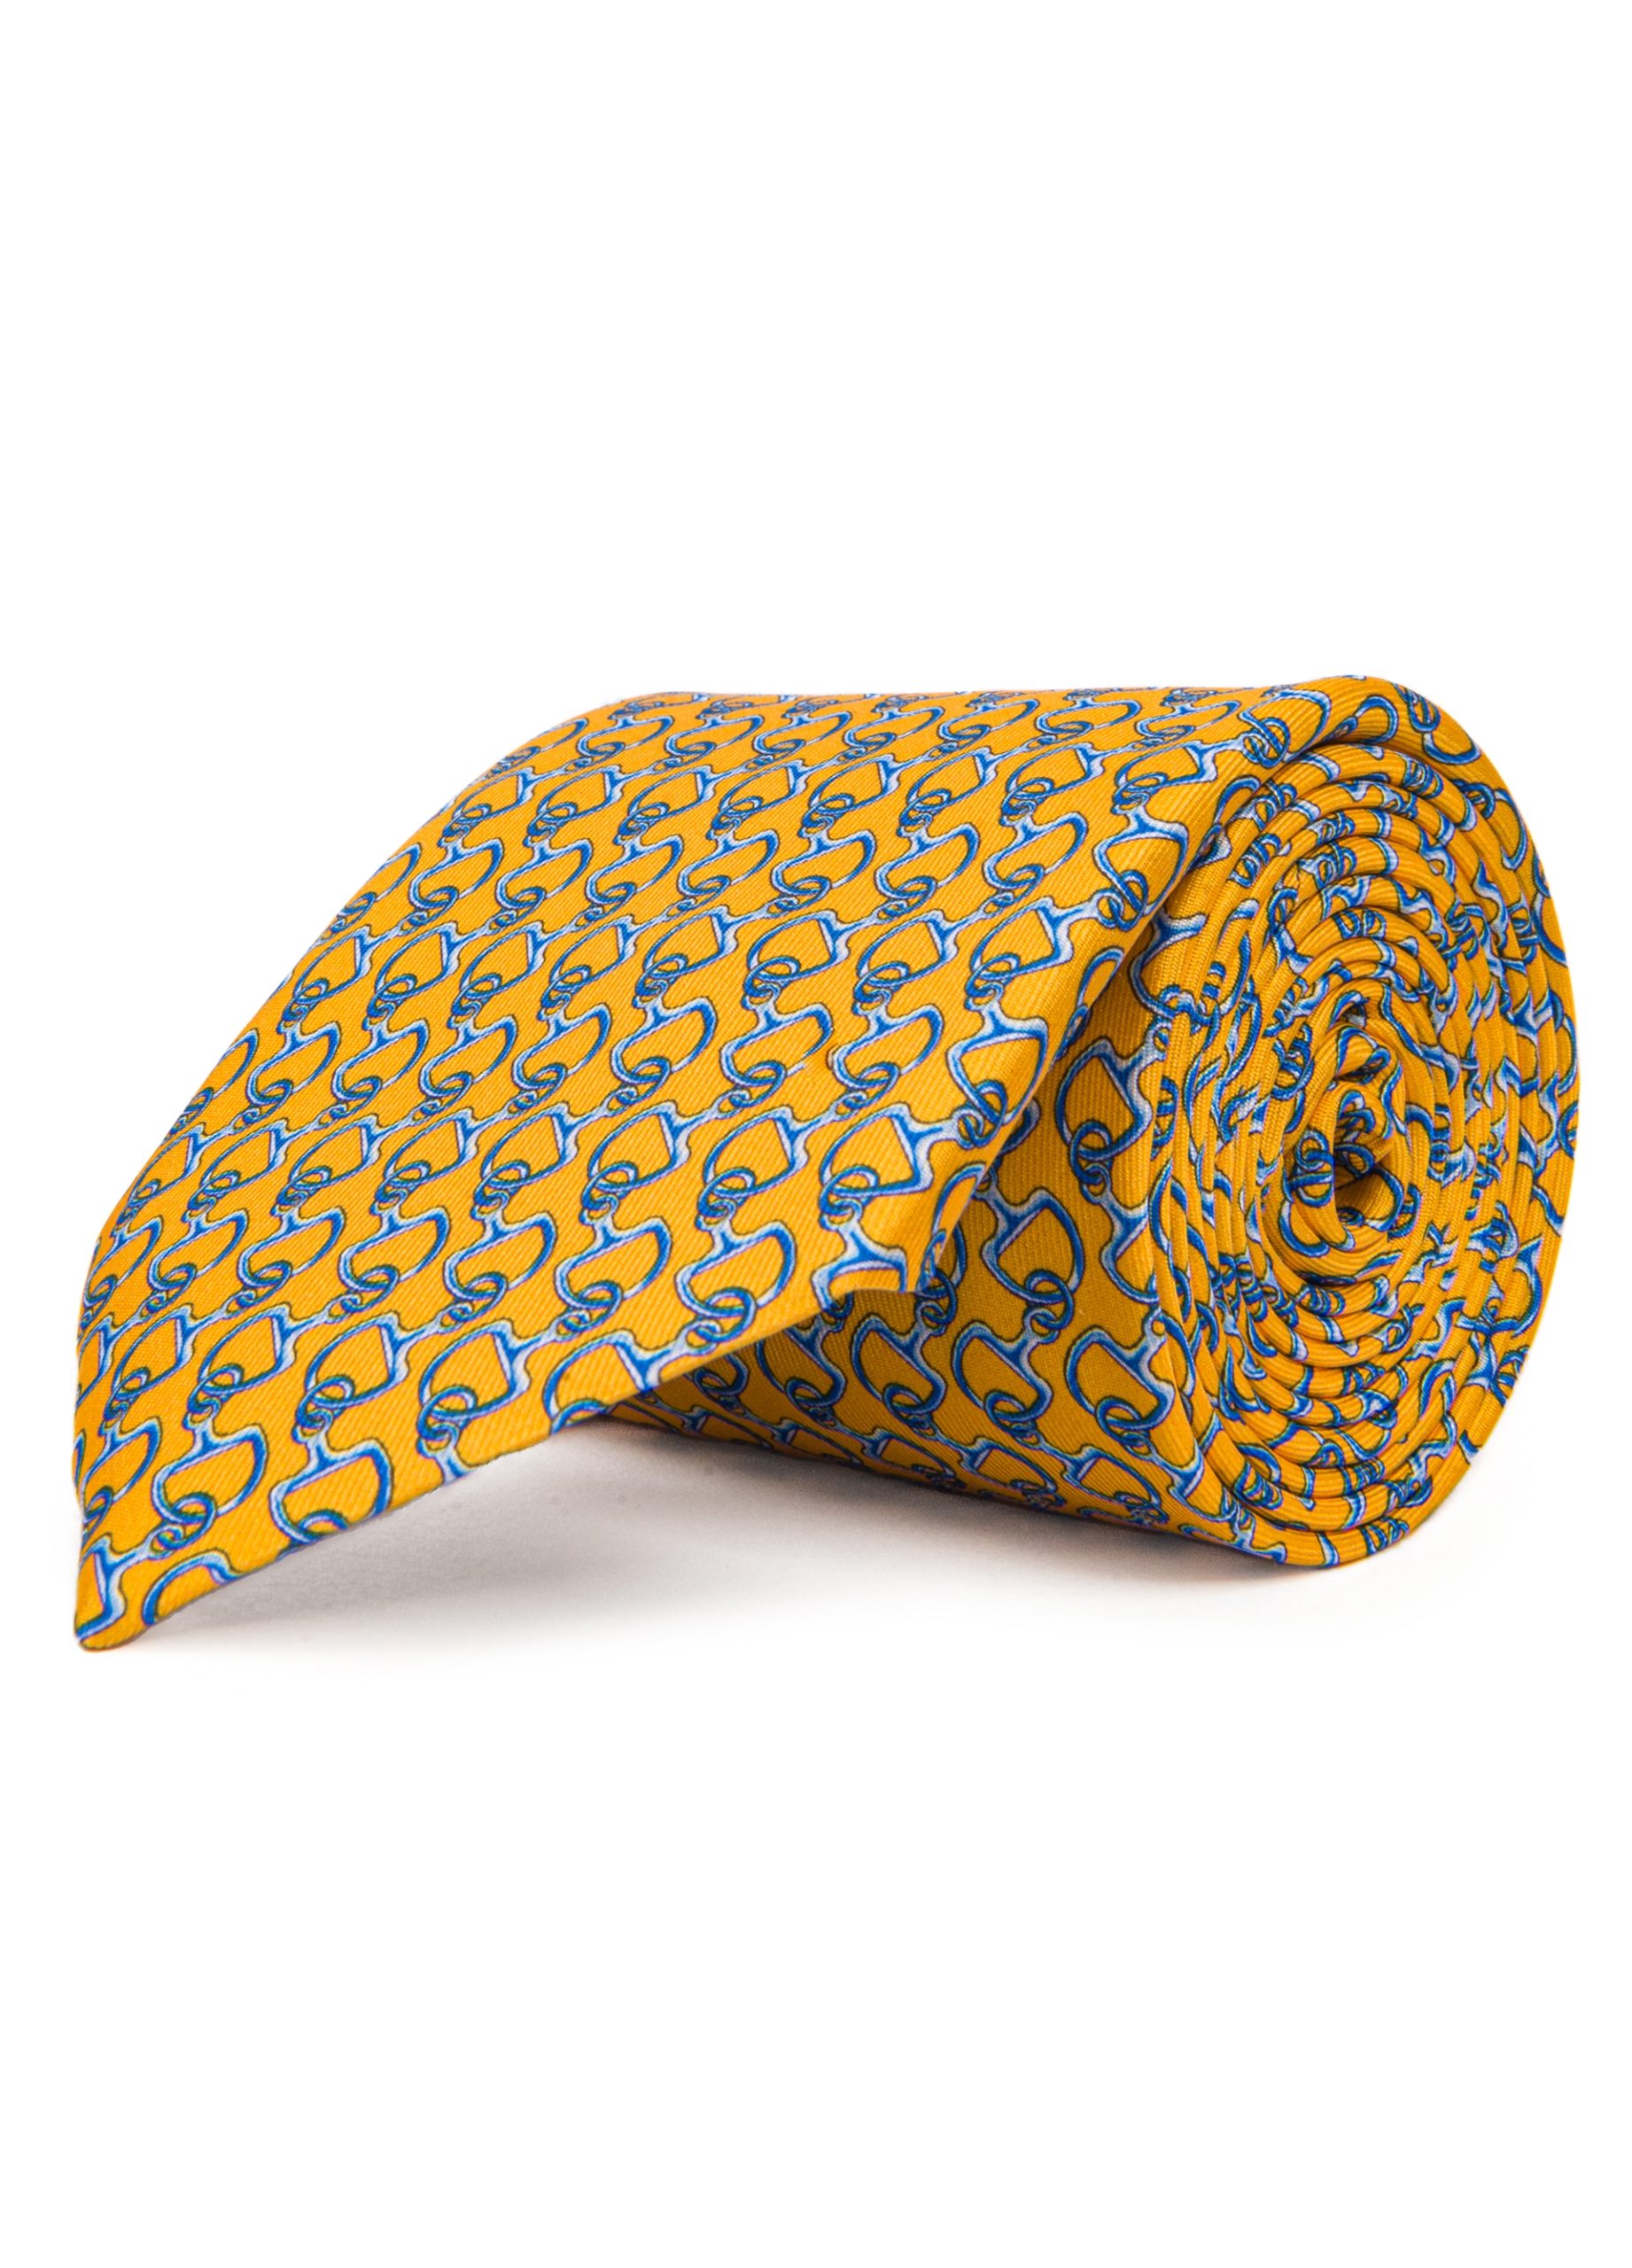 Men’s smart yellow and blue silk tie